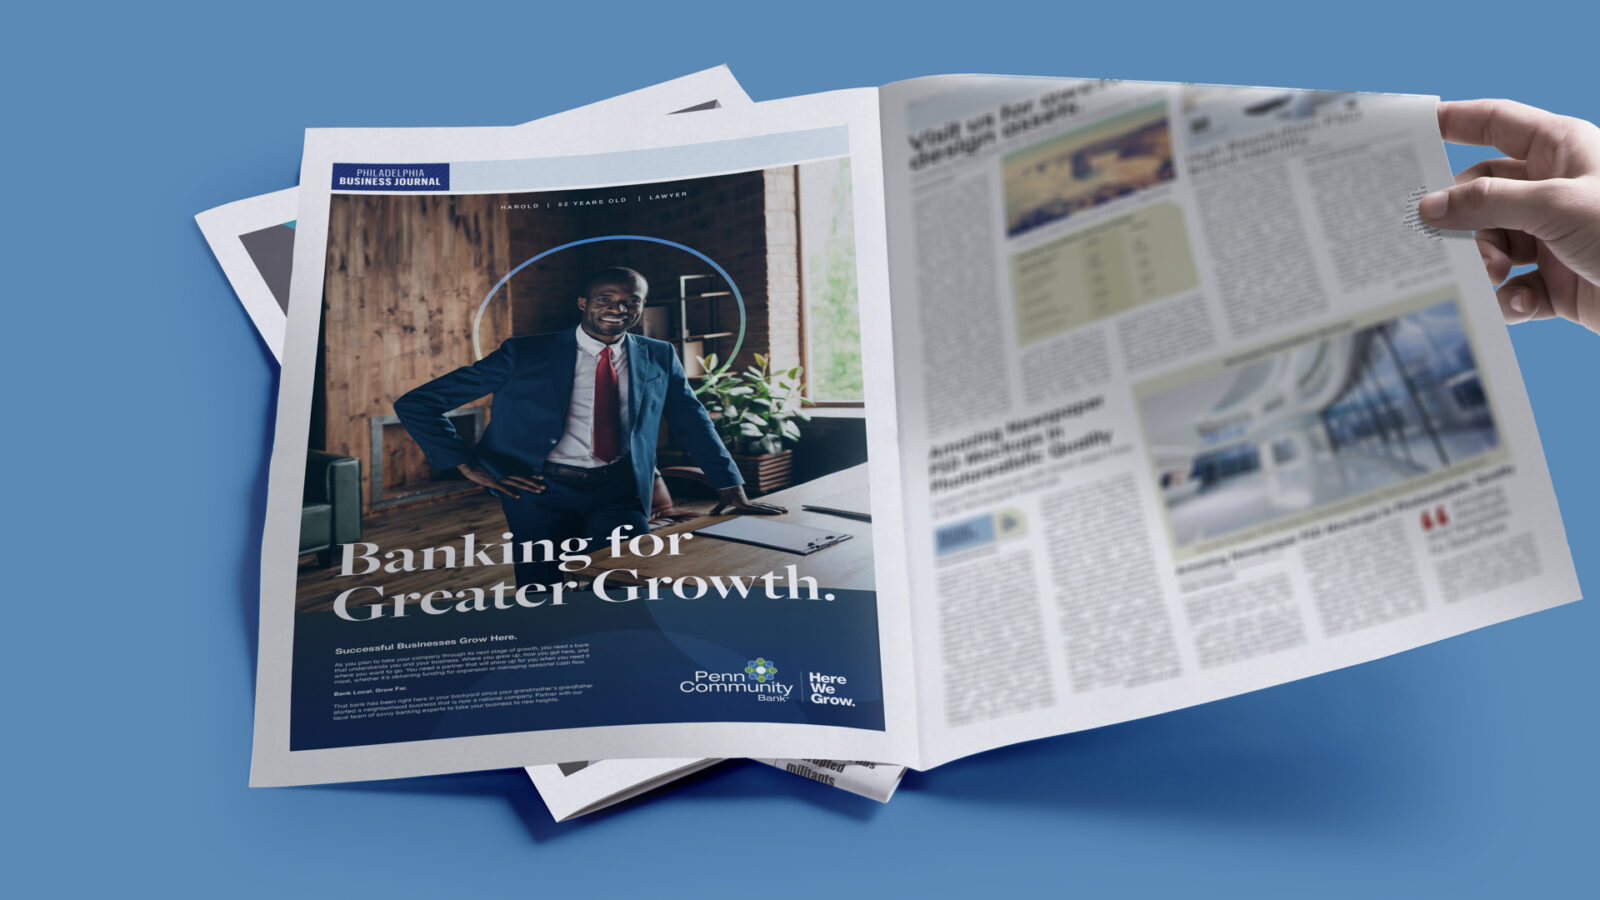 Penn Community Bank - newspaper ads